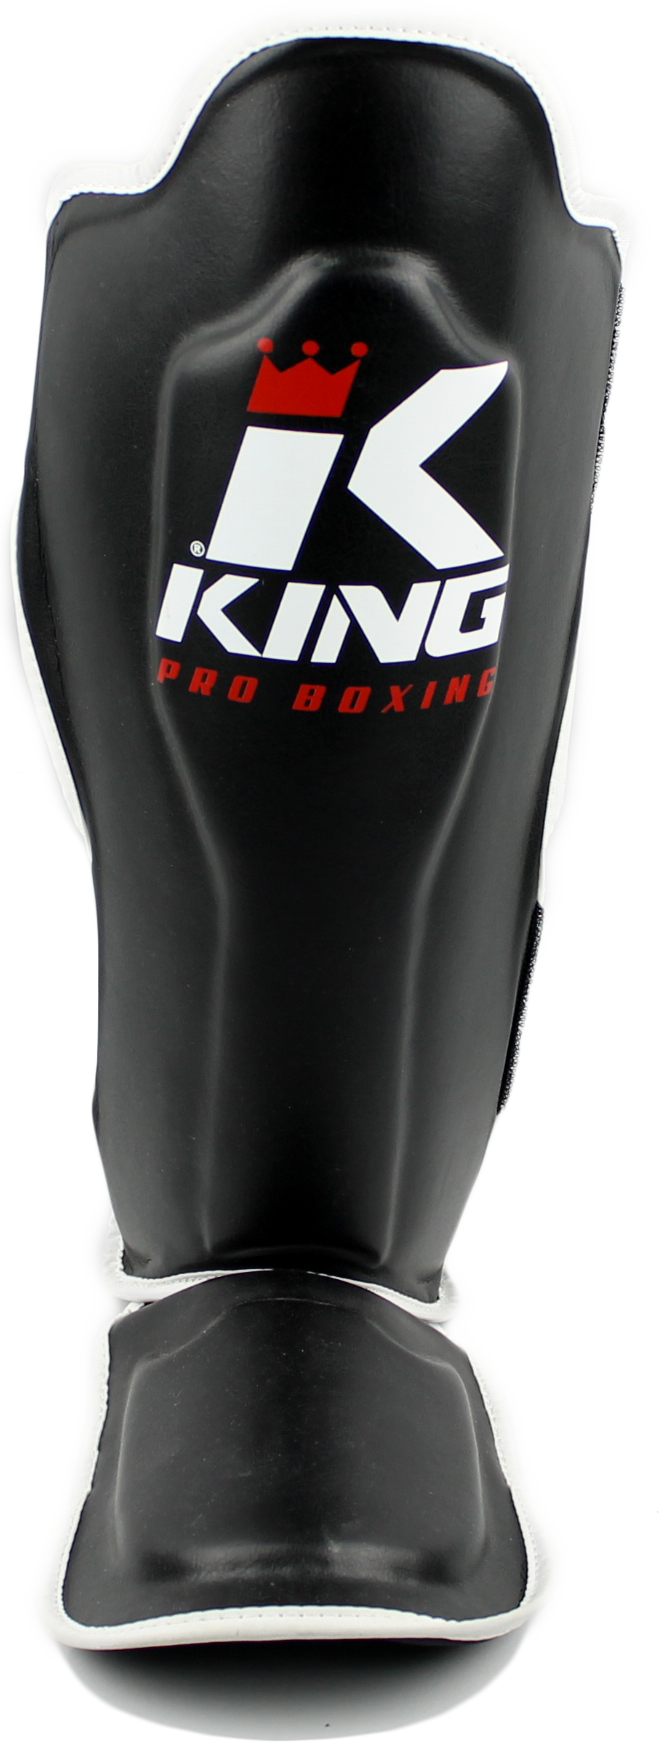 Protège tibias King pro boxing - Thor Blanc - lecoinduring